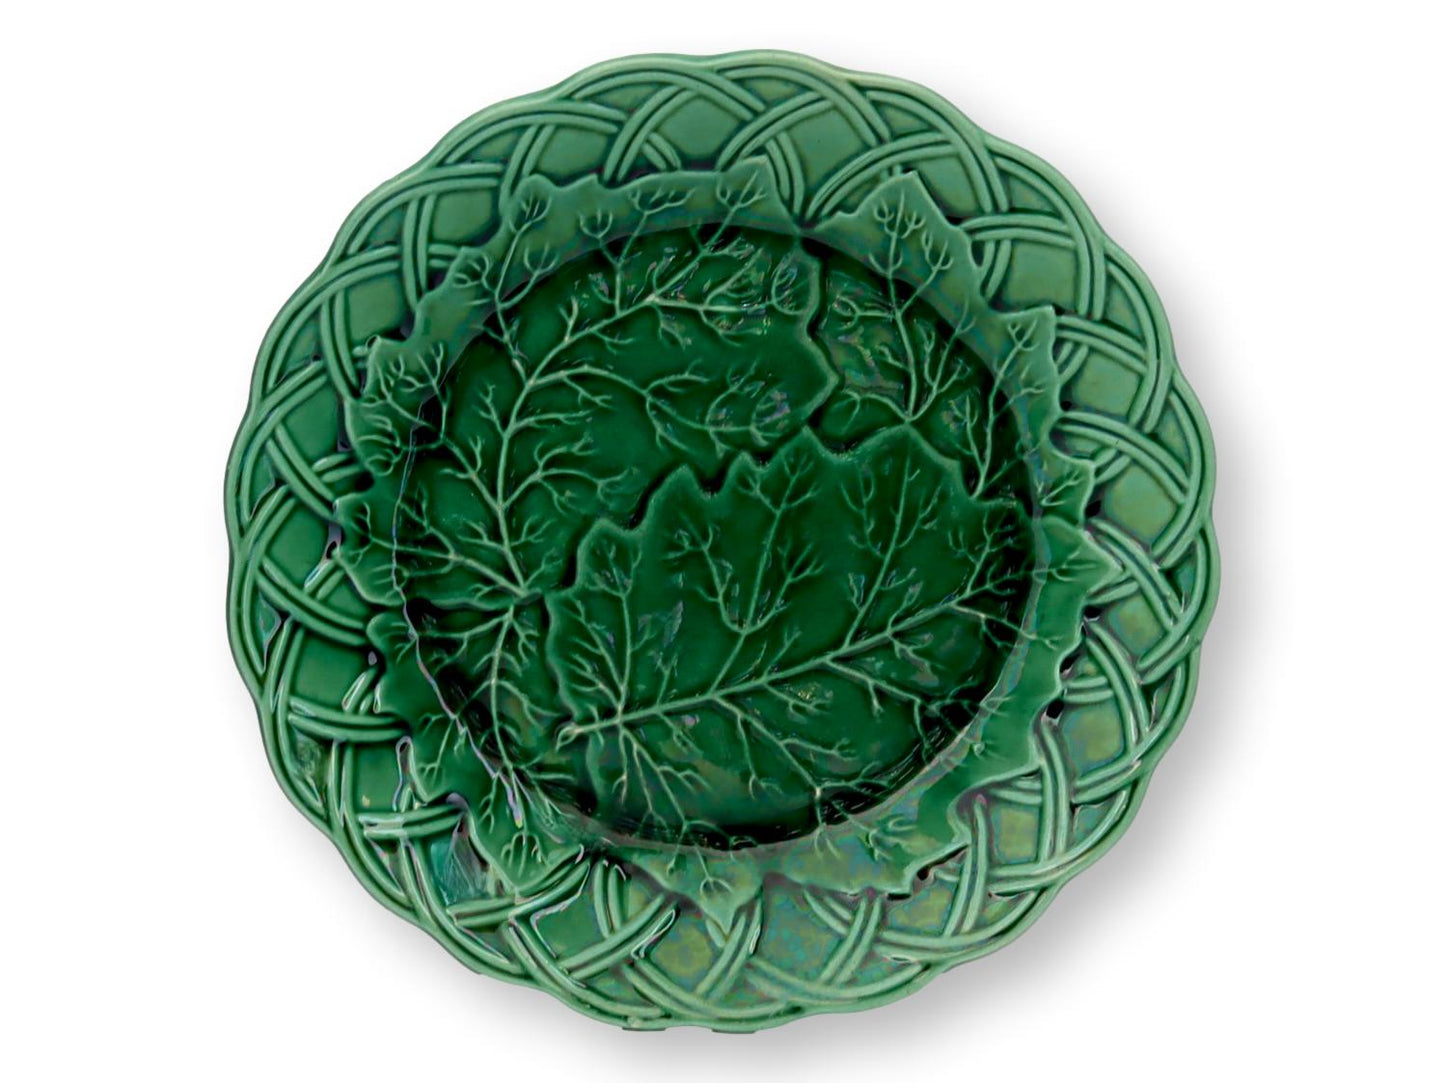 Antique English Green Majolica Plates, C. 1900 | Set of 10